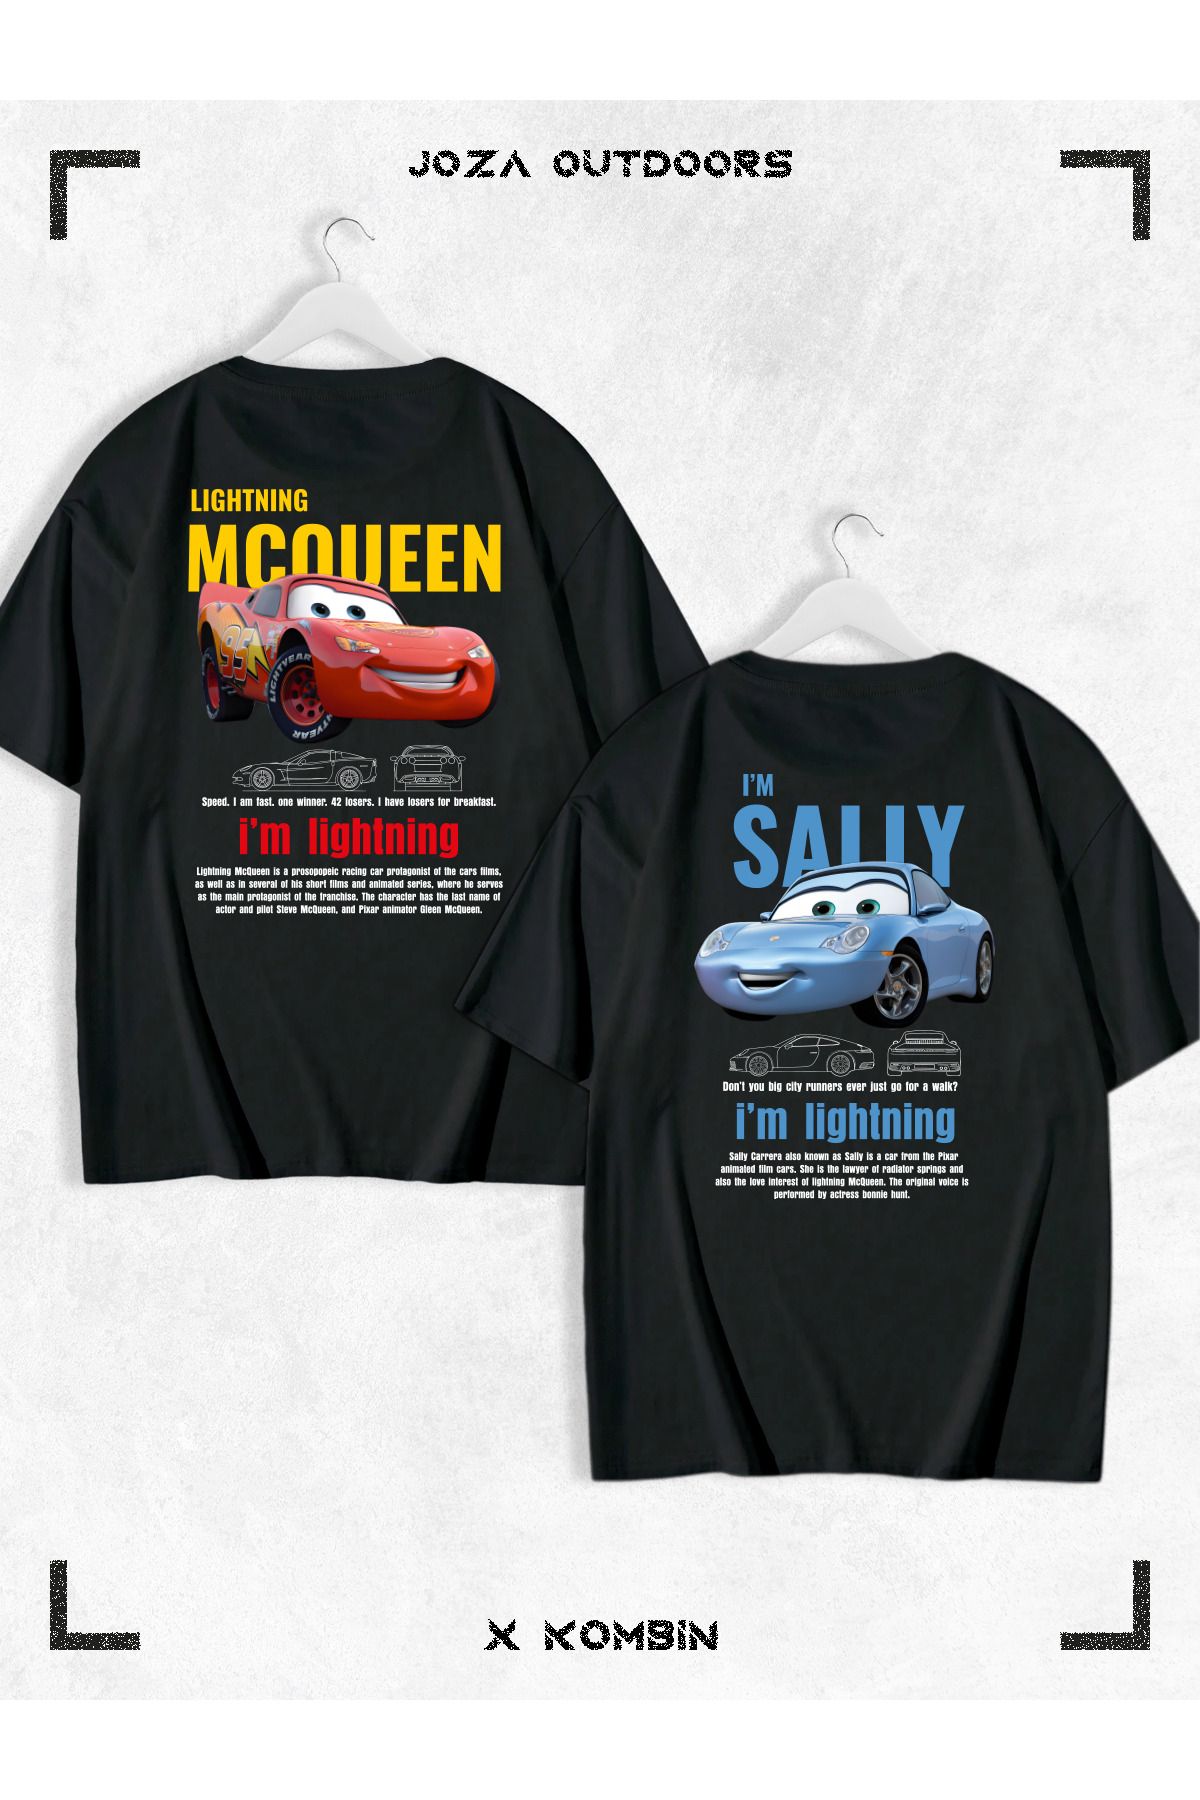 Joza Outdoors Kadın Erkek Unisex Sally & Mcqueen Cars Sevgili Çift Kombini Oversize Renkli Tshirt 2'li Takım